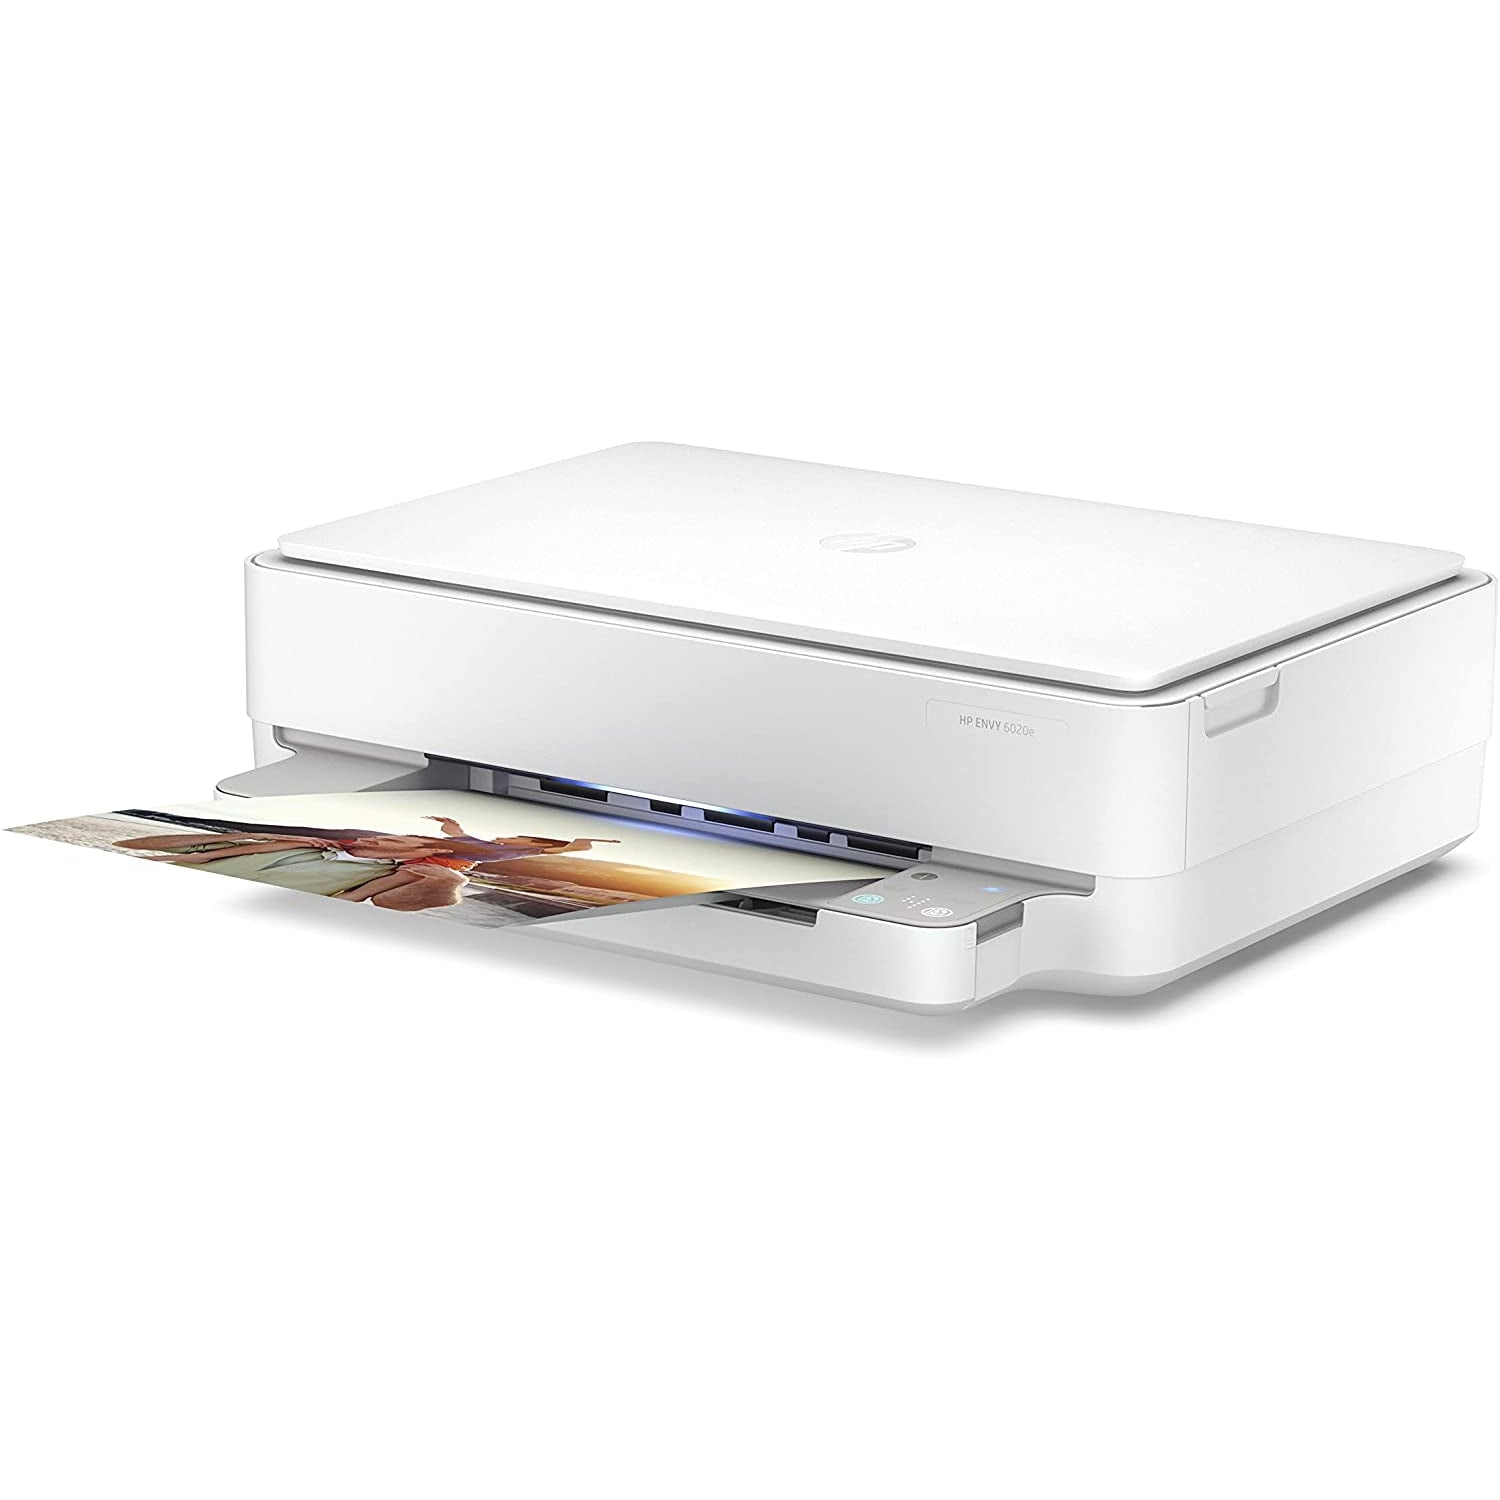 HP Envy 6030e All in One Colour Printer - White